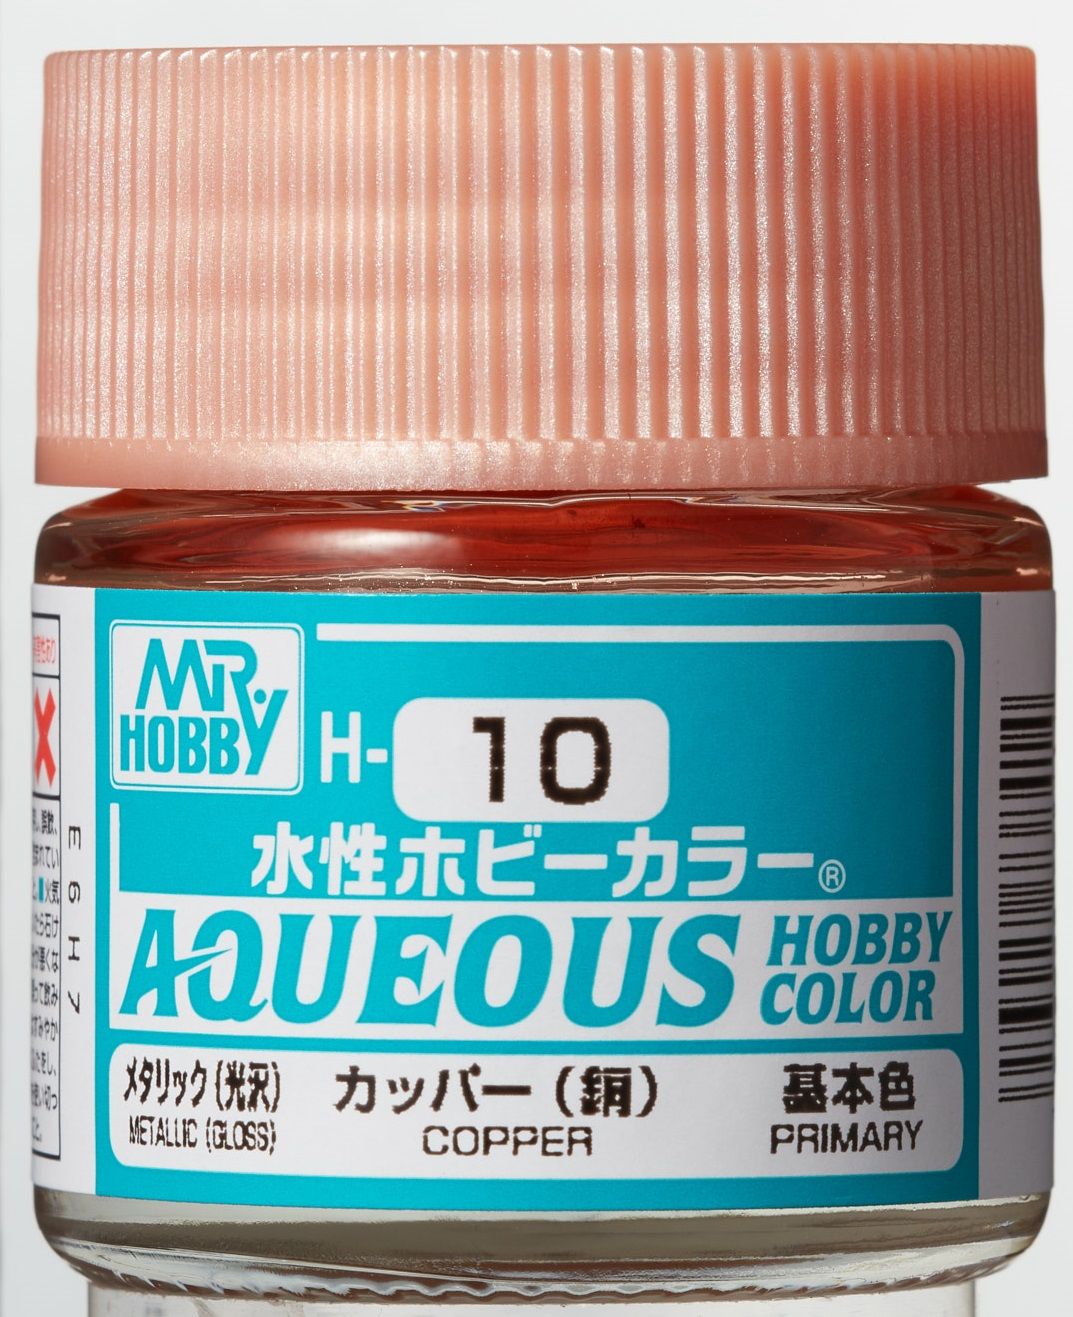 (X) Mr Hobby - Gunze H-010 - Aqueous Hobby Colors (10 ml) Copper